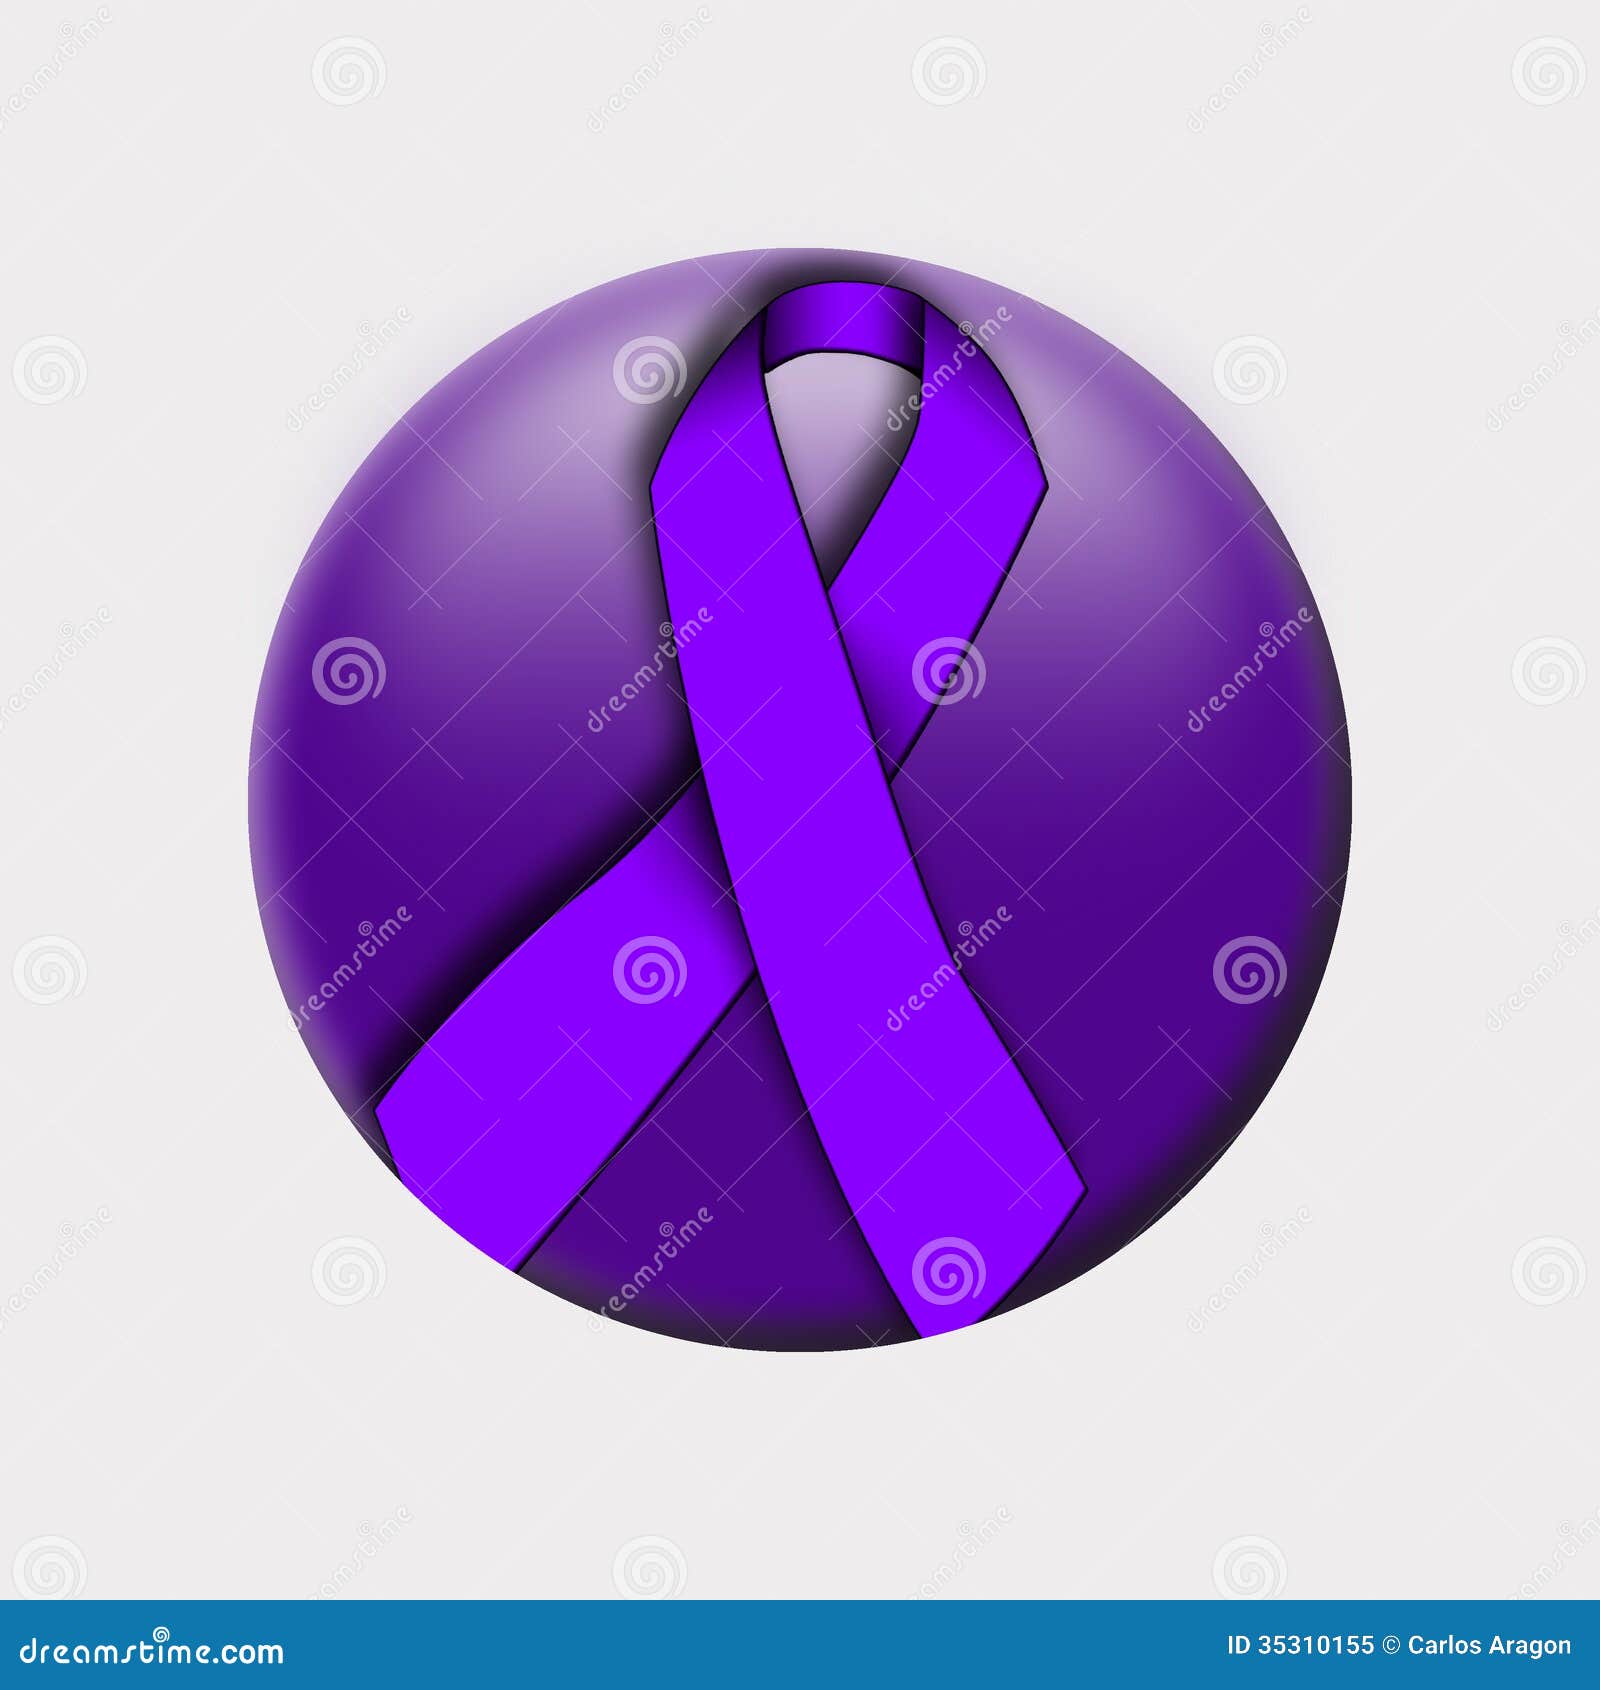 ribbon against domestic violence